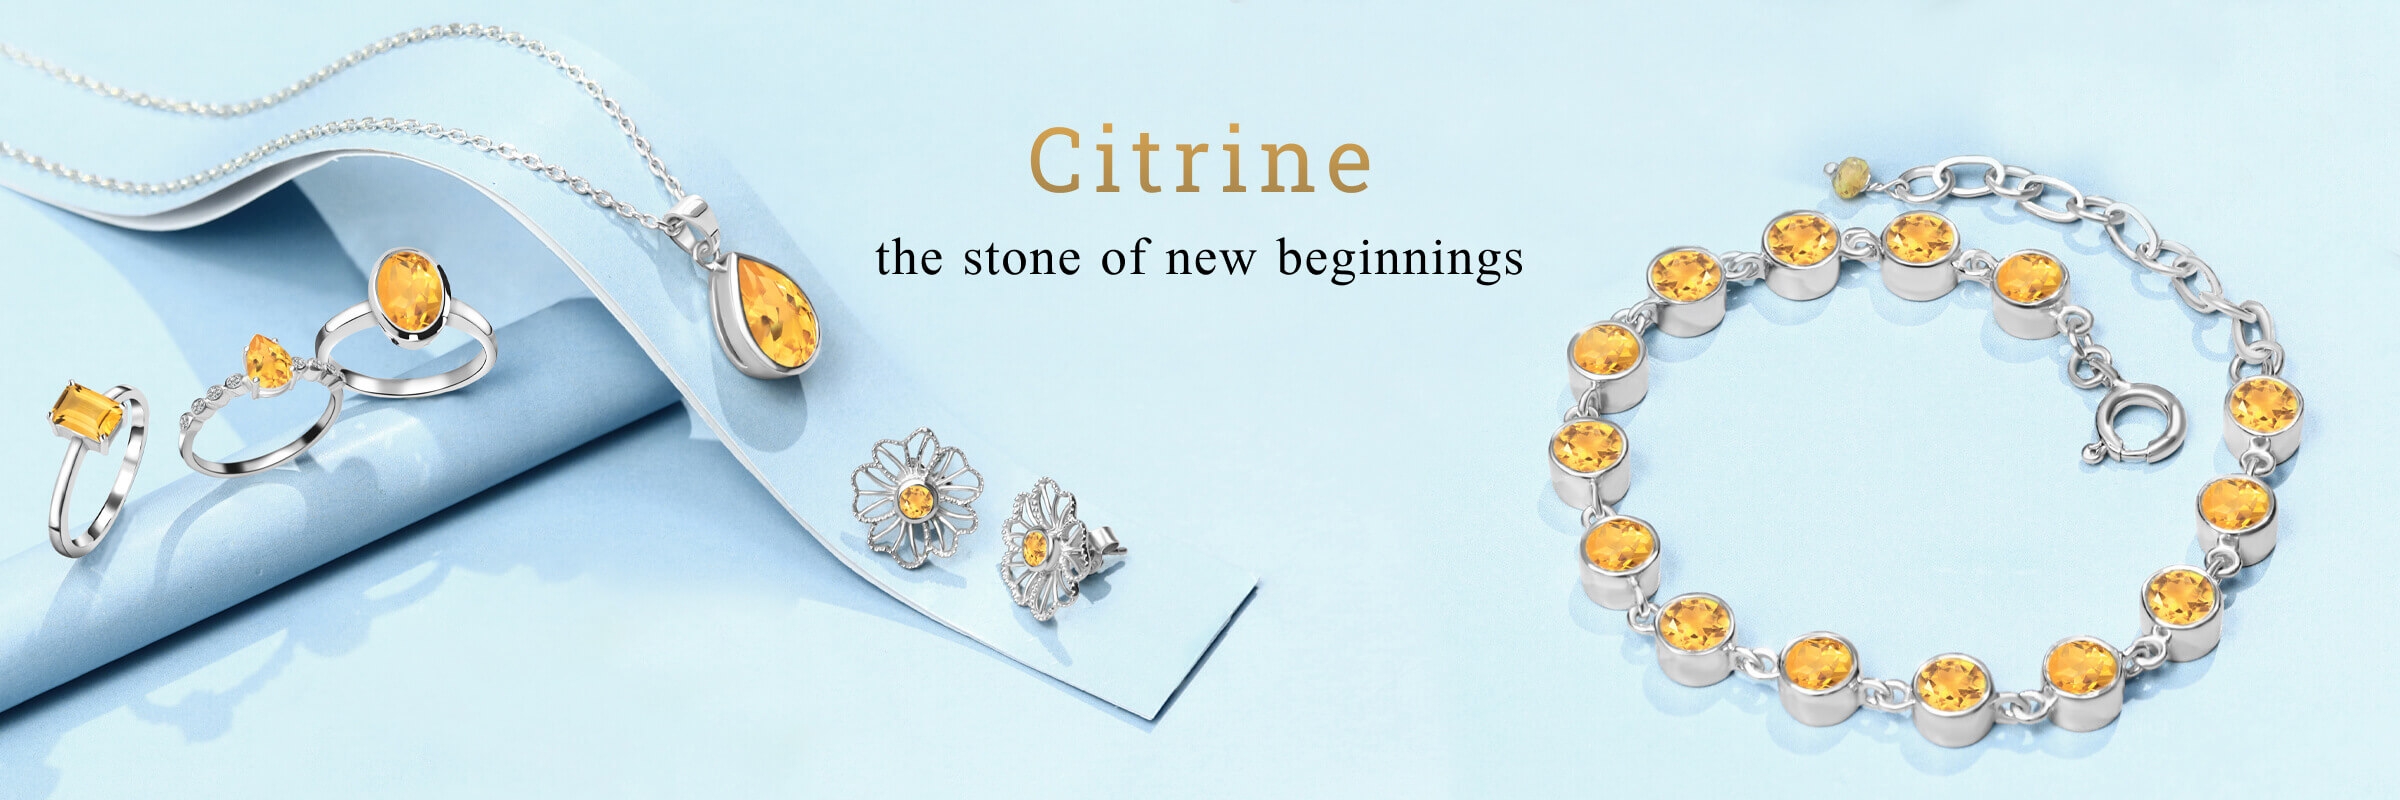 Citrine - the stone of new beginnings